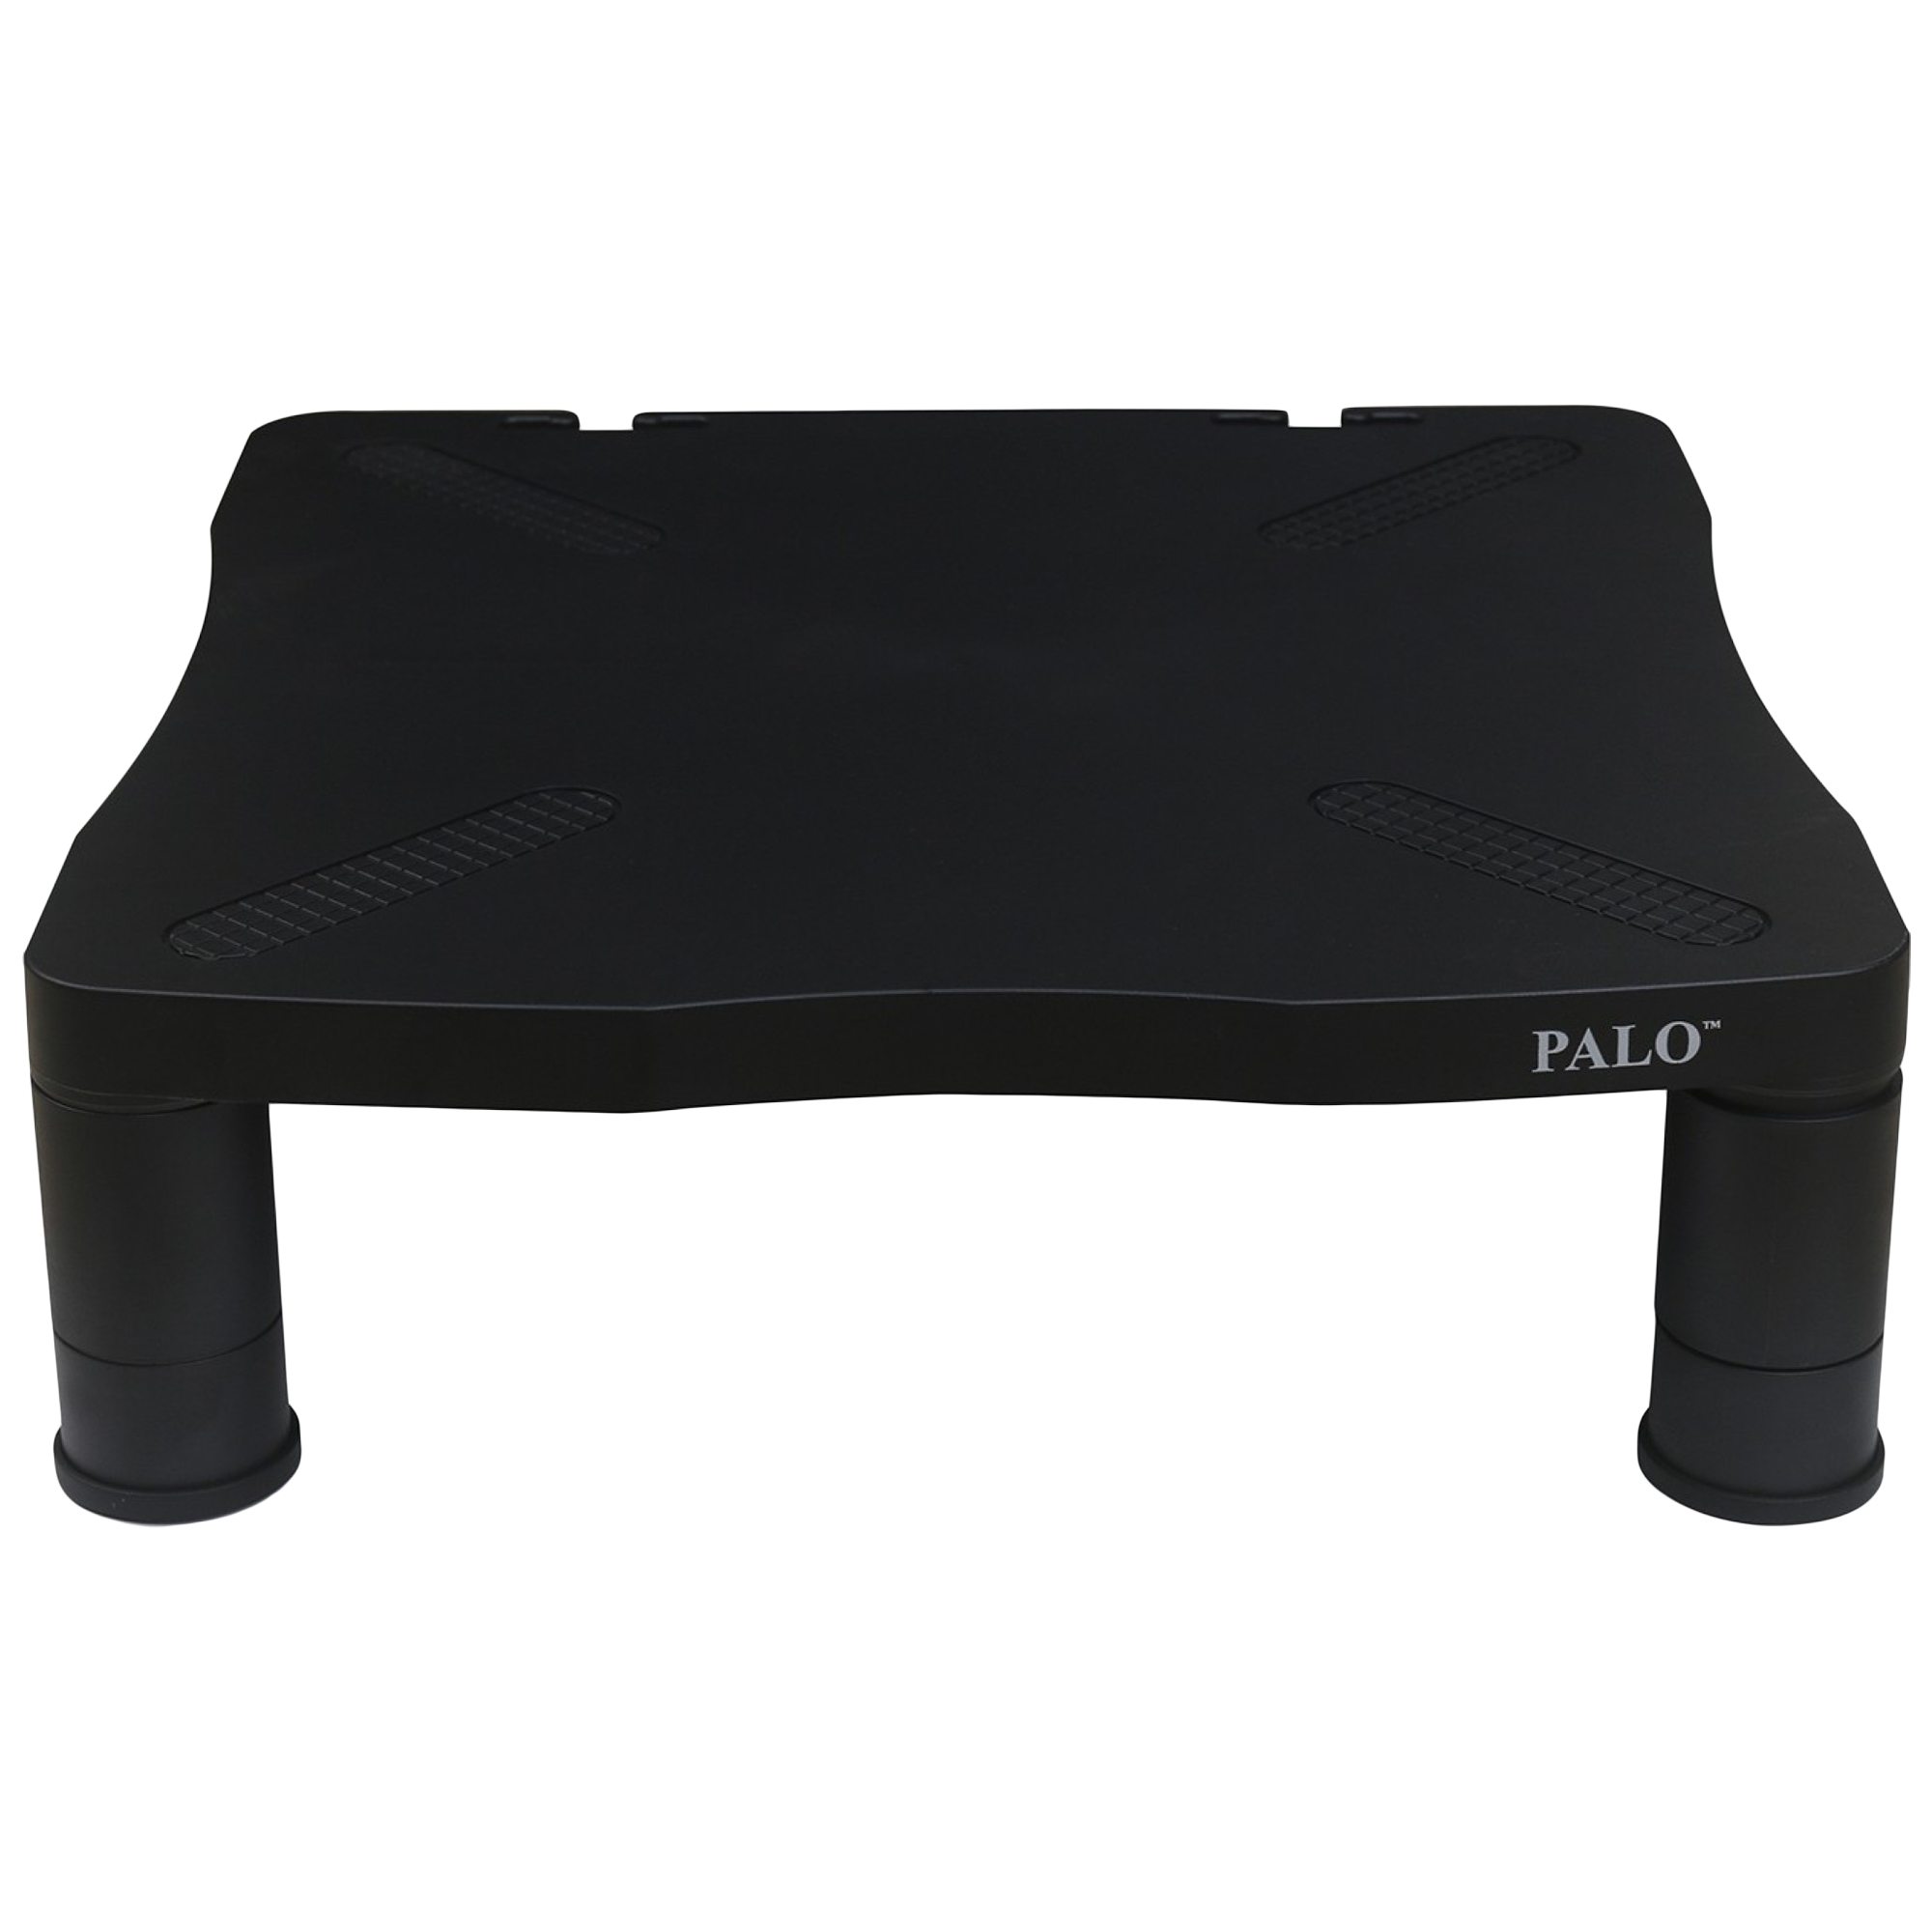 PALO - Palo PALO006 Monitor Stand For Monitor and Printer (Adjustable Height, Kanfa263, Black)